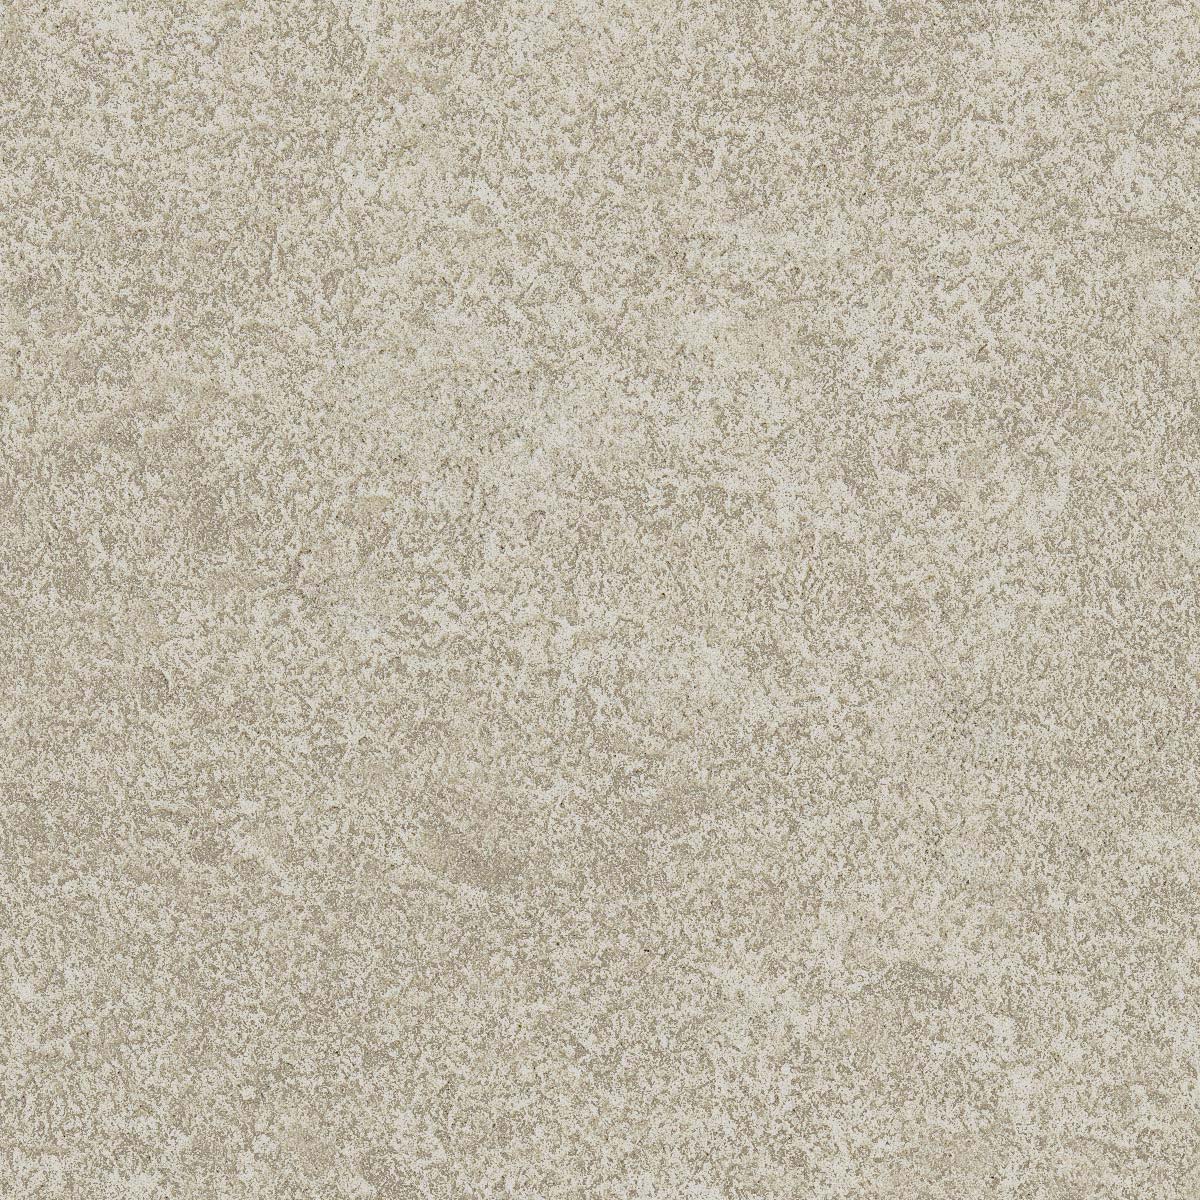 granular_limestone_1200x1200s